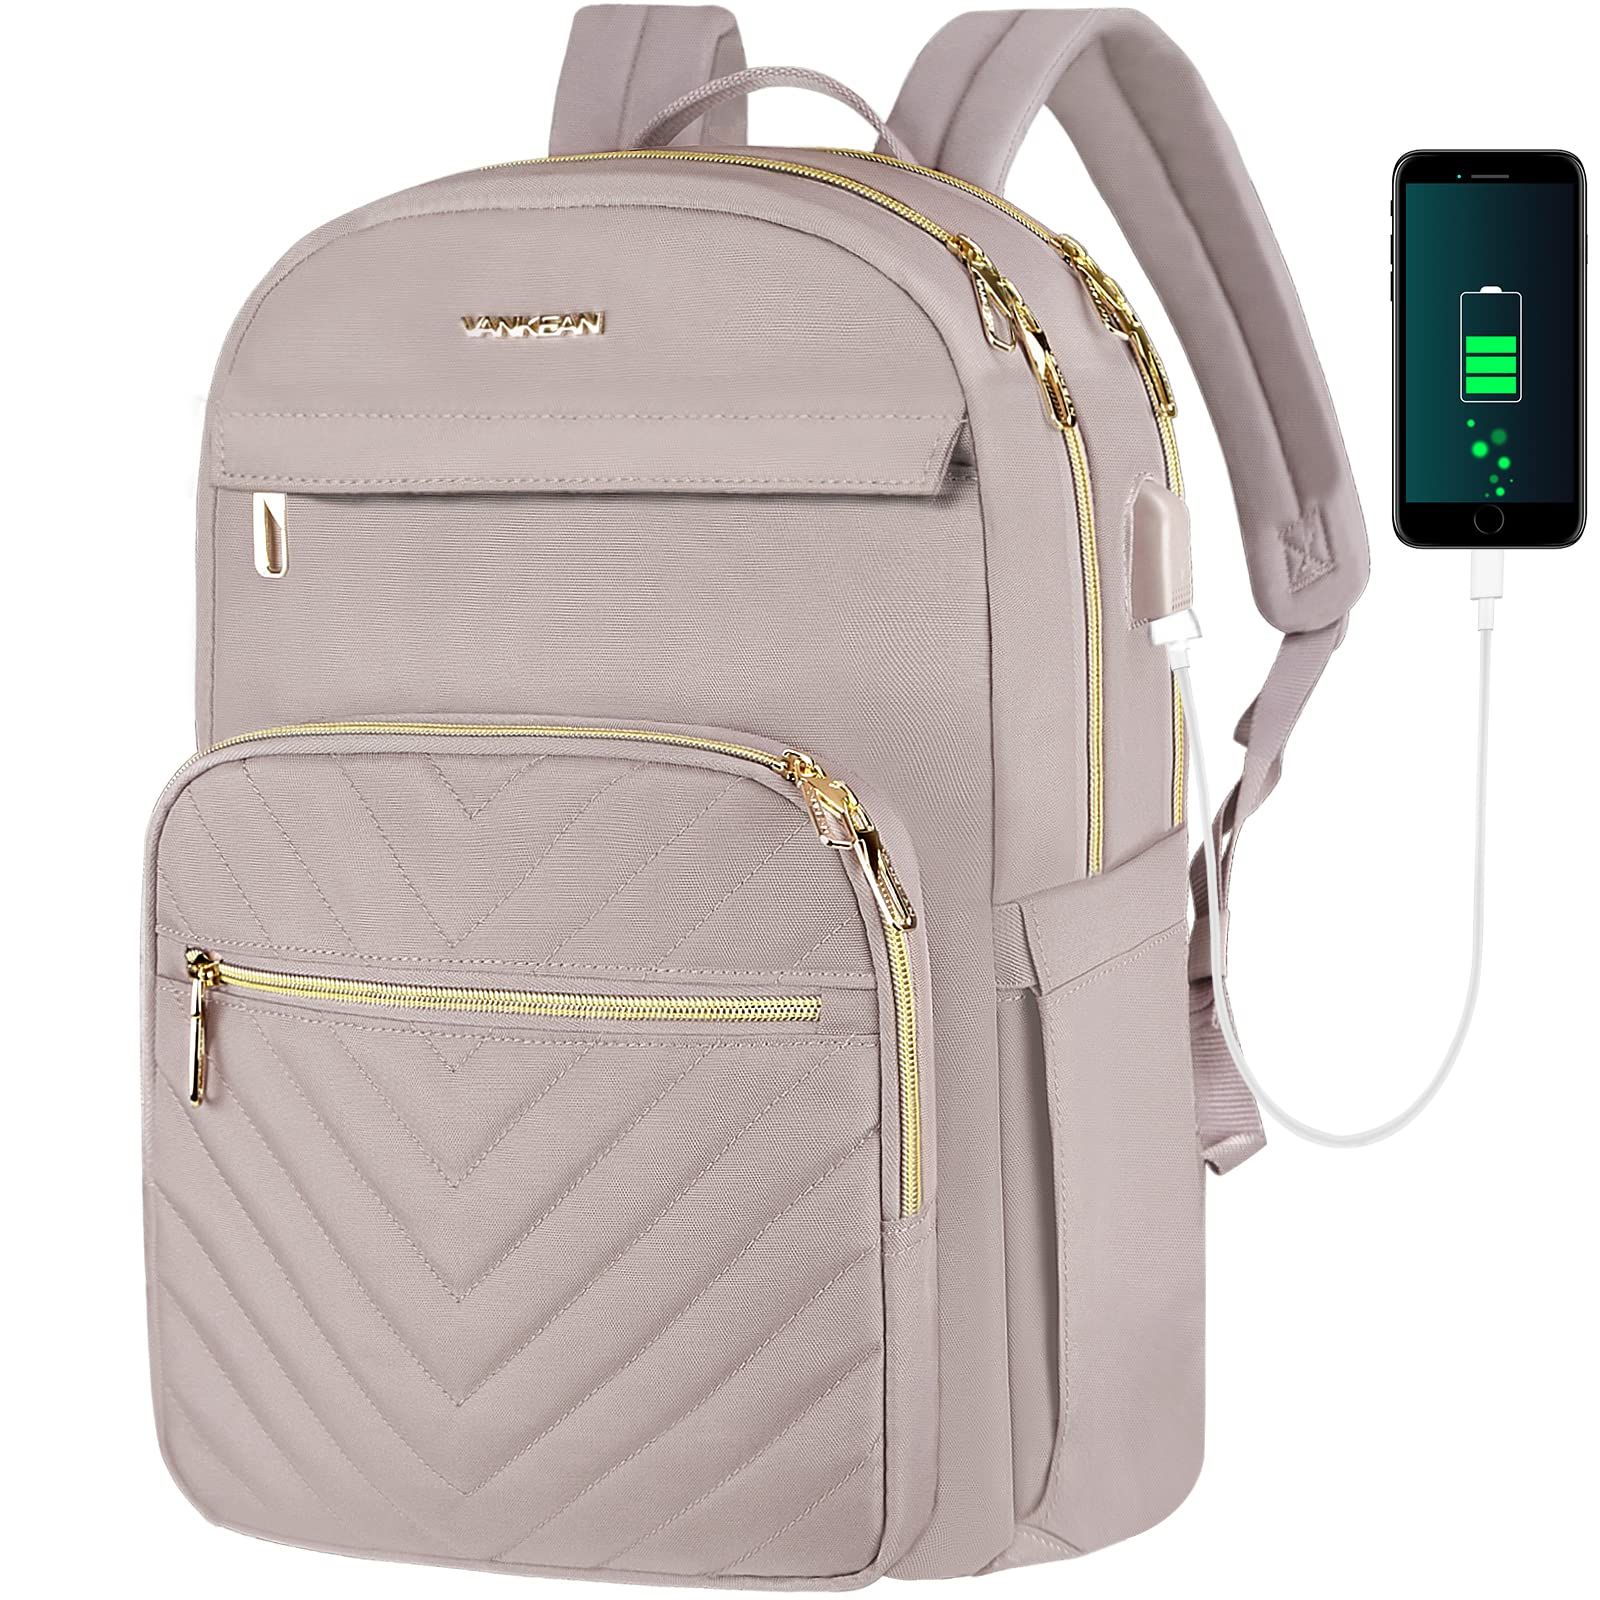 back to school backpacks | Bags, Fashion bags, Back to school backpacks